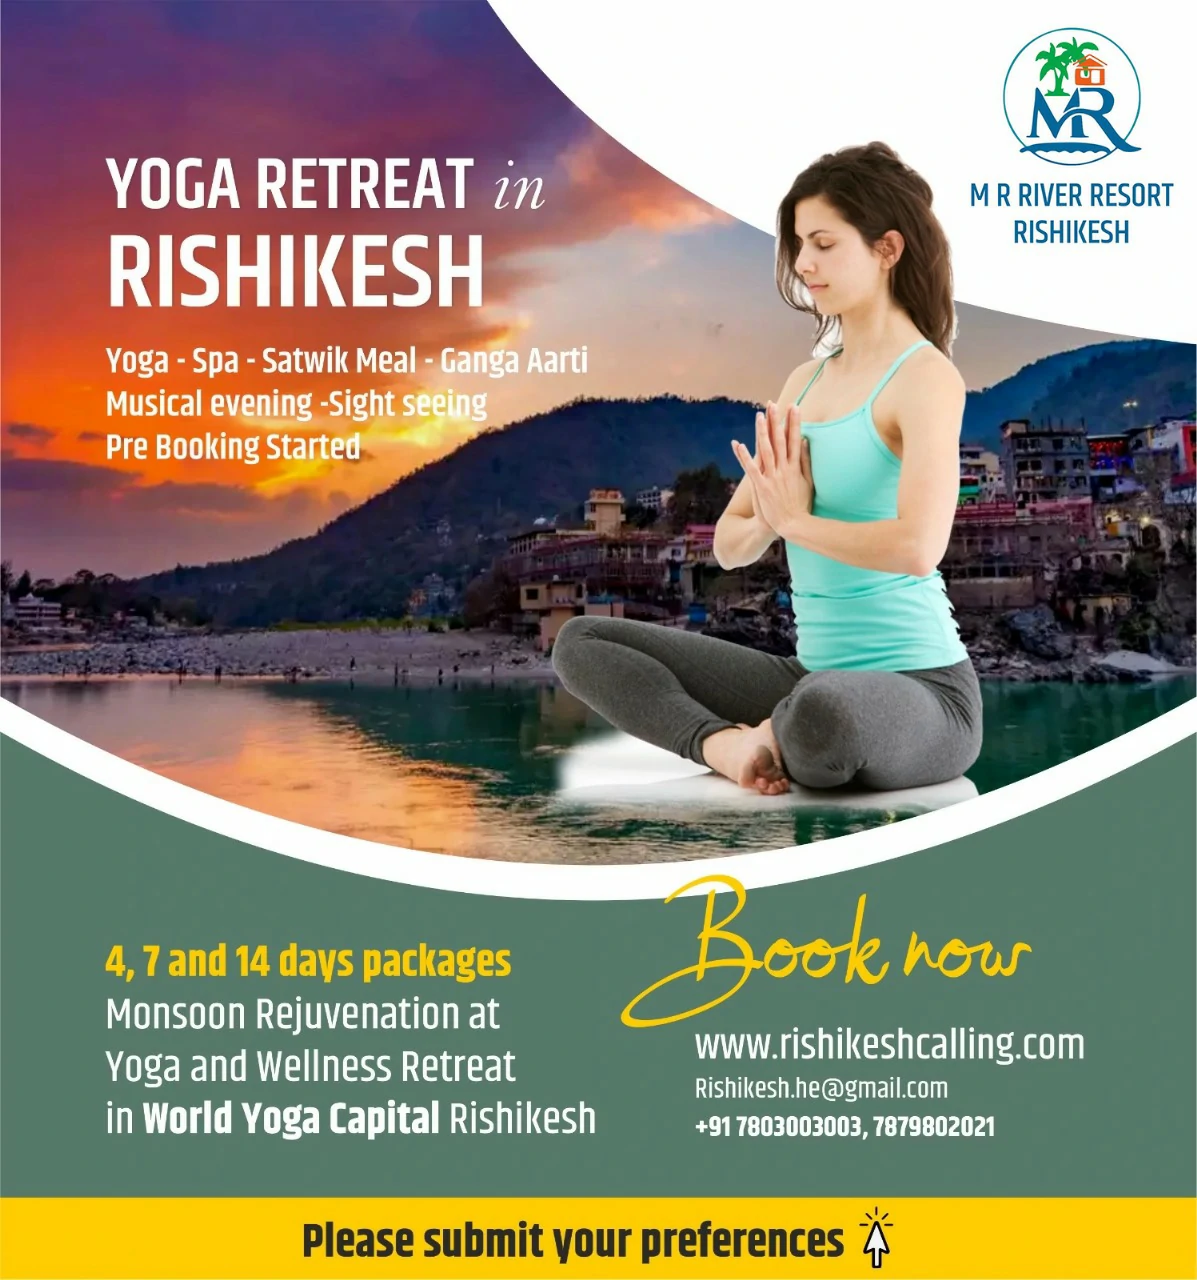 Welcome to Yoga Retreat